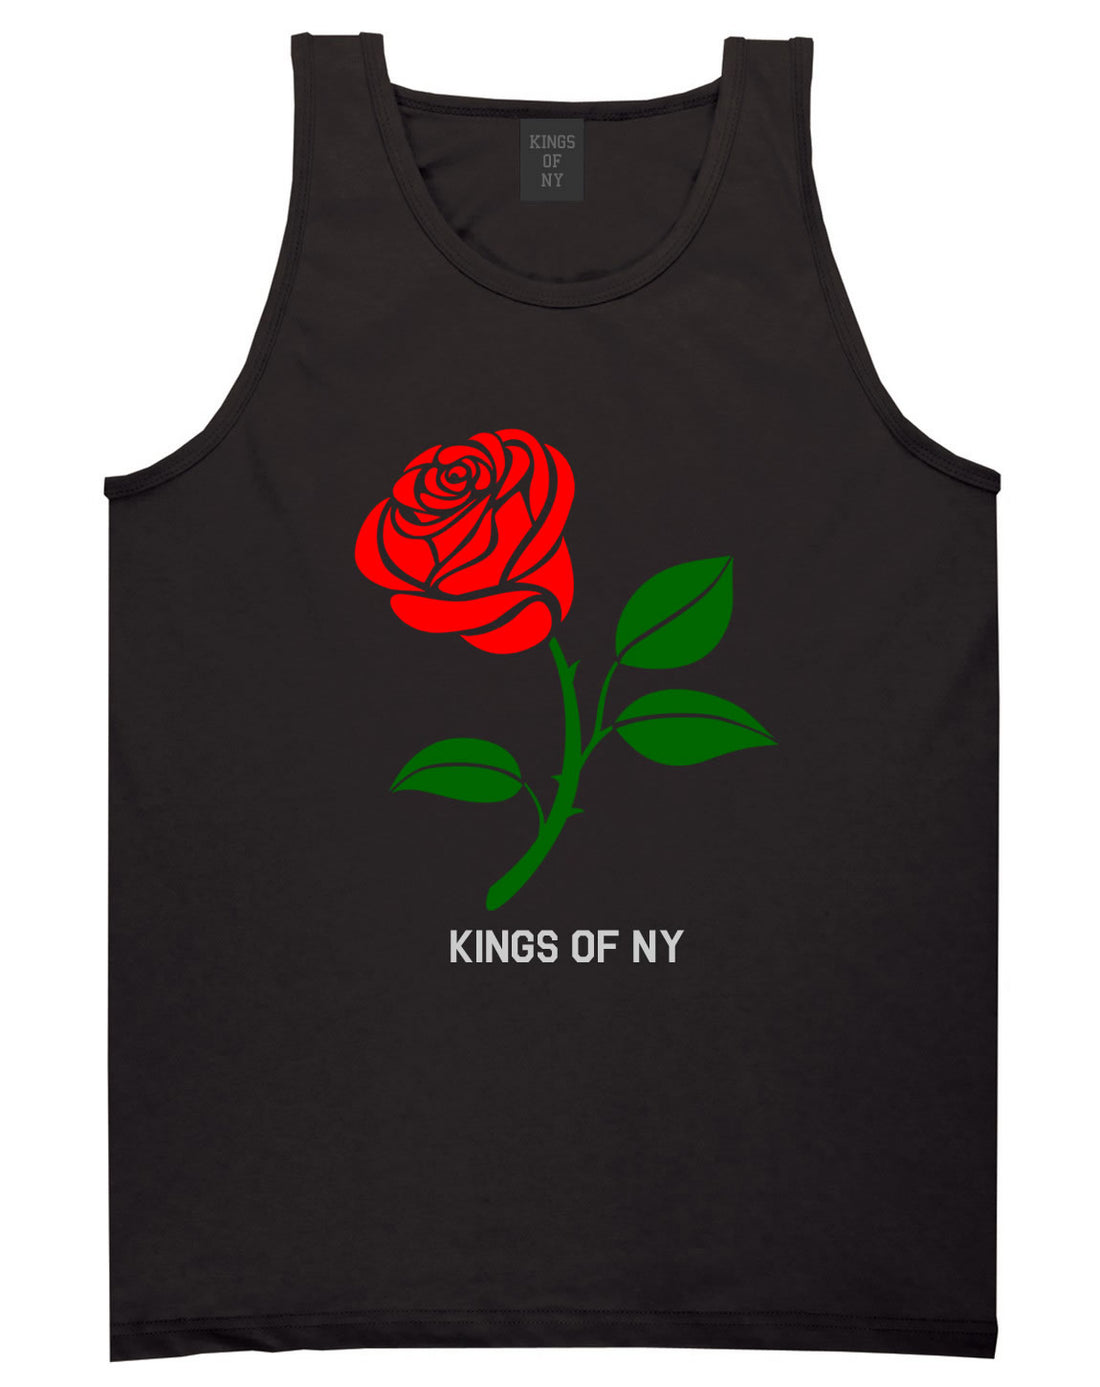 Single Red Rose Mens Tank Top Shirt Black By Kings Of NY